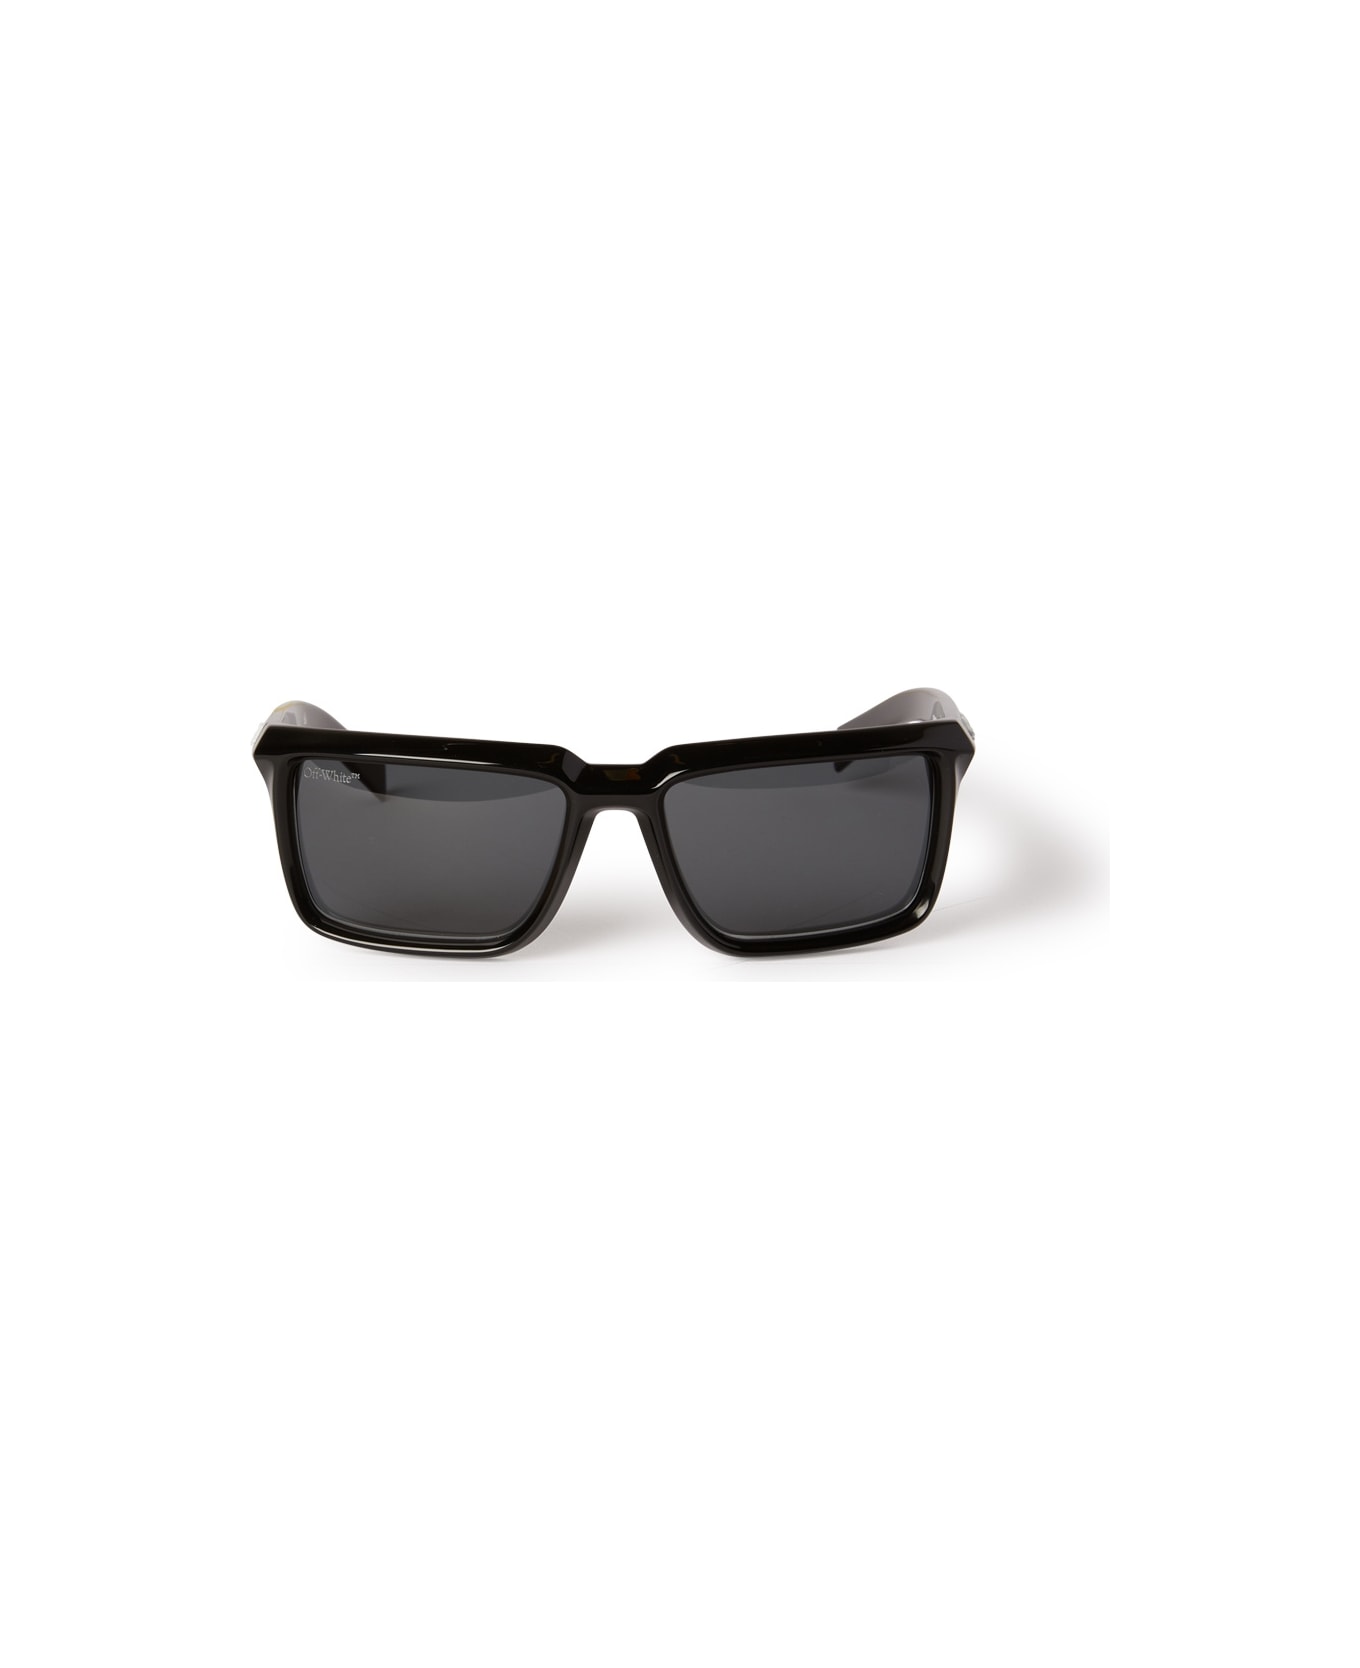 Off-White PORTLAND SUNGLASSES Sunglasses - Black